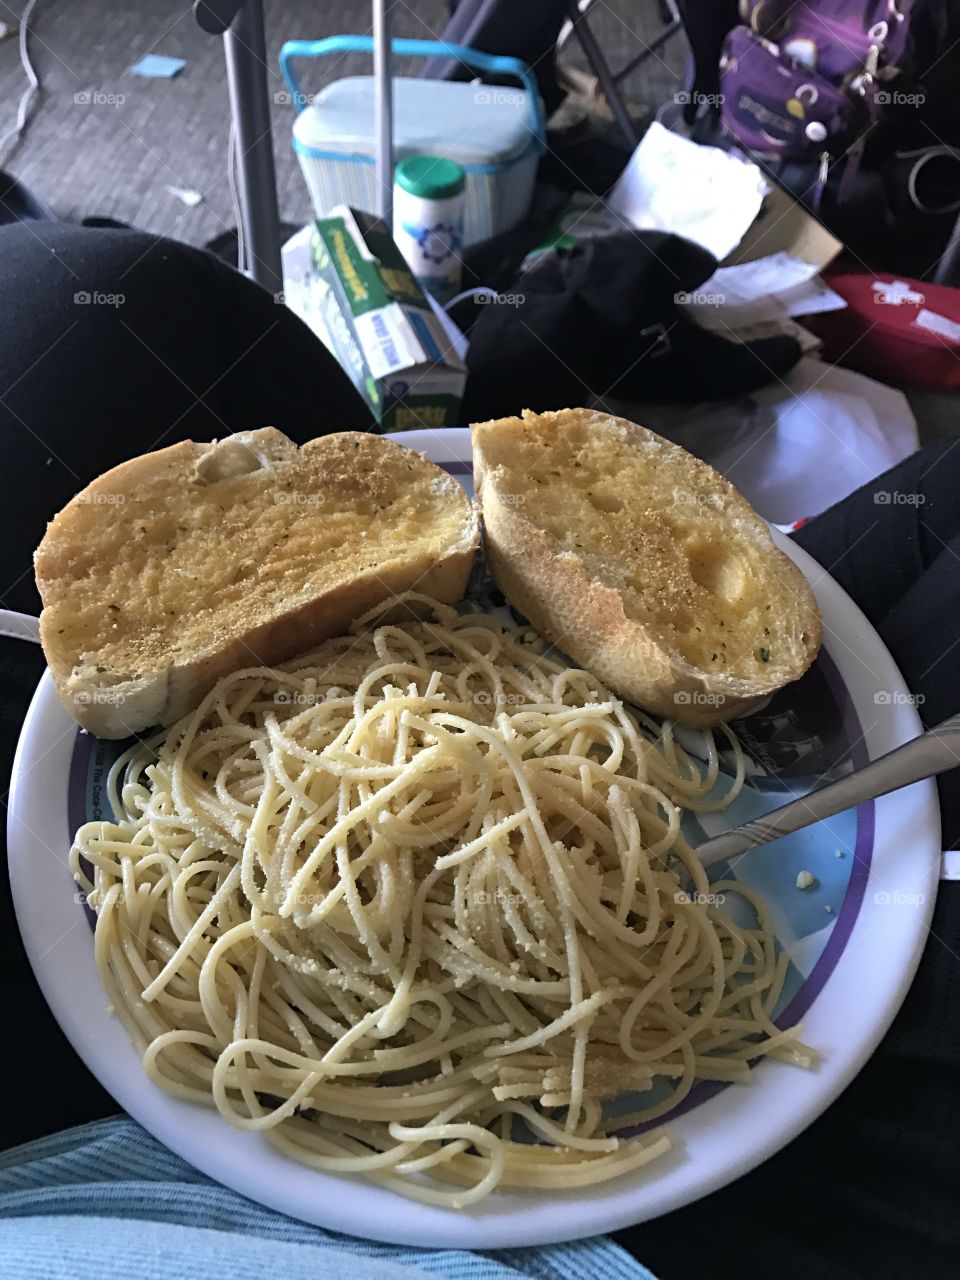 Spaghetti dinner with homemade garlic bread.